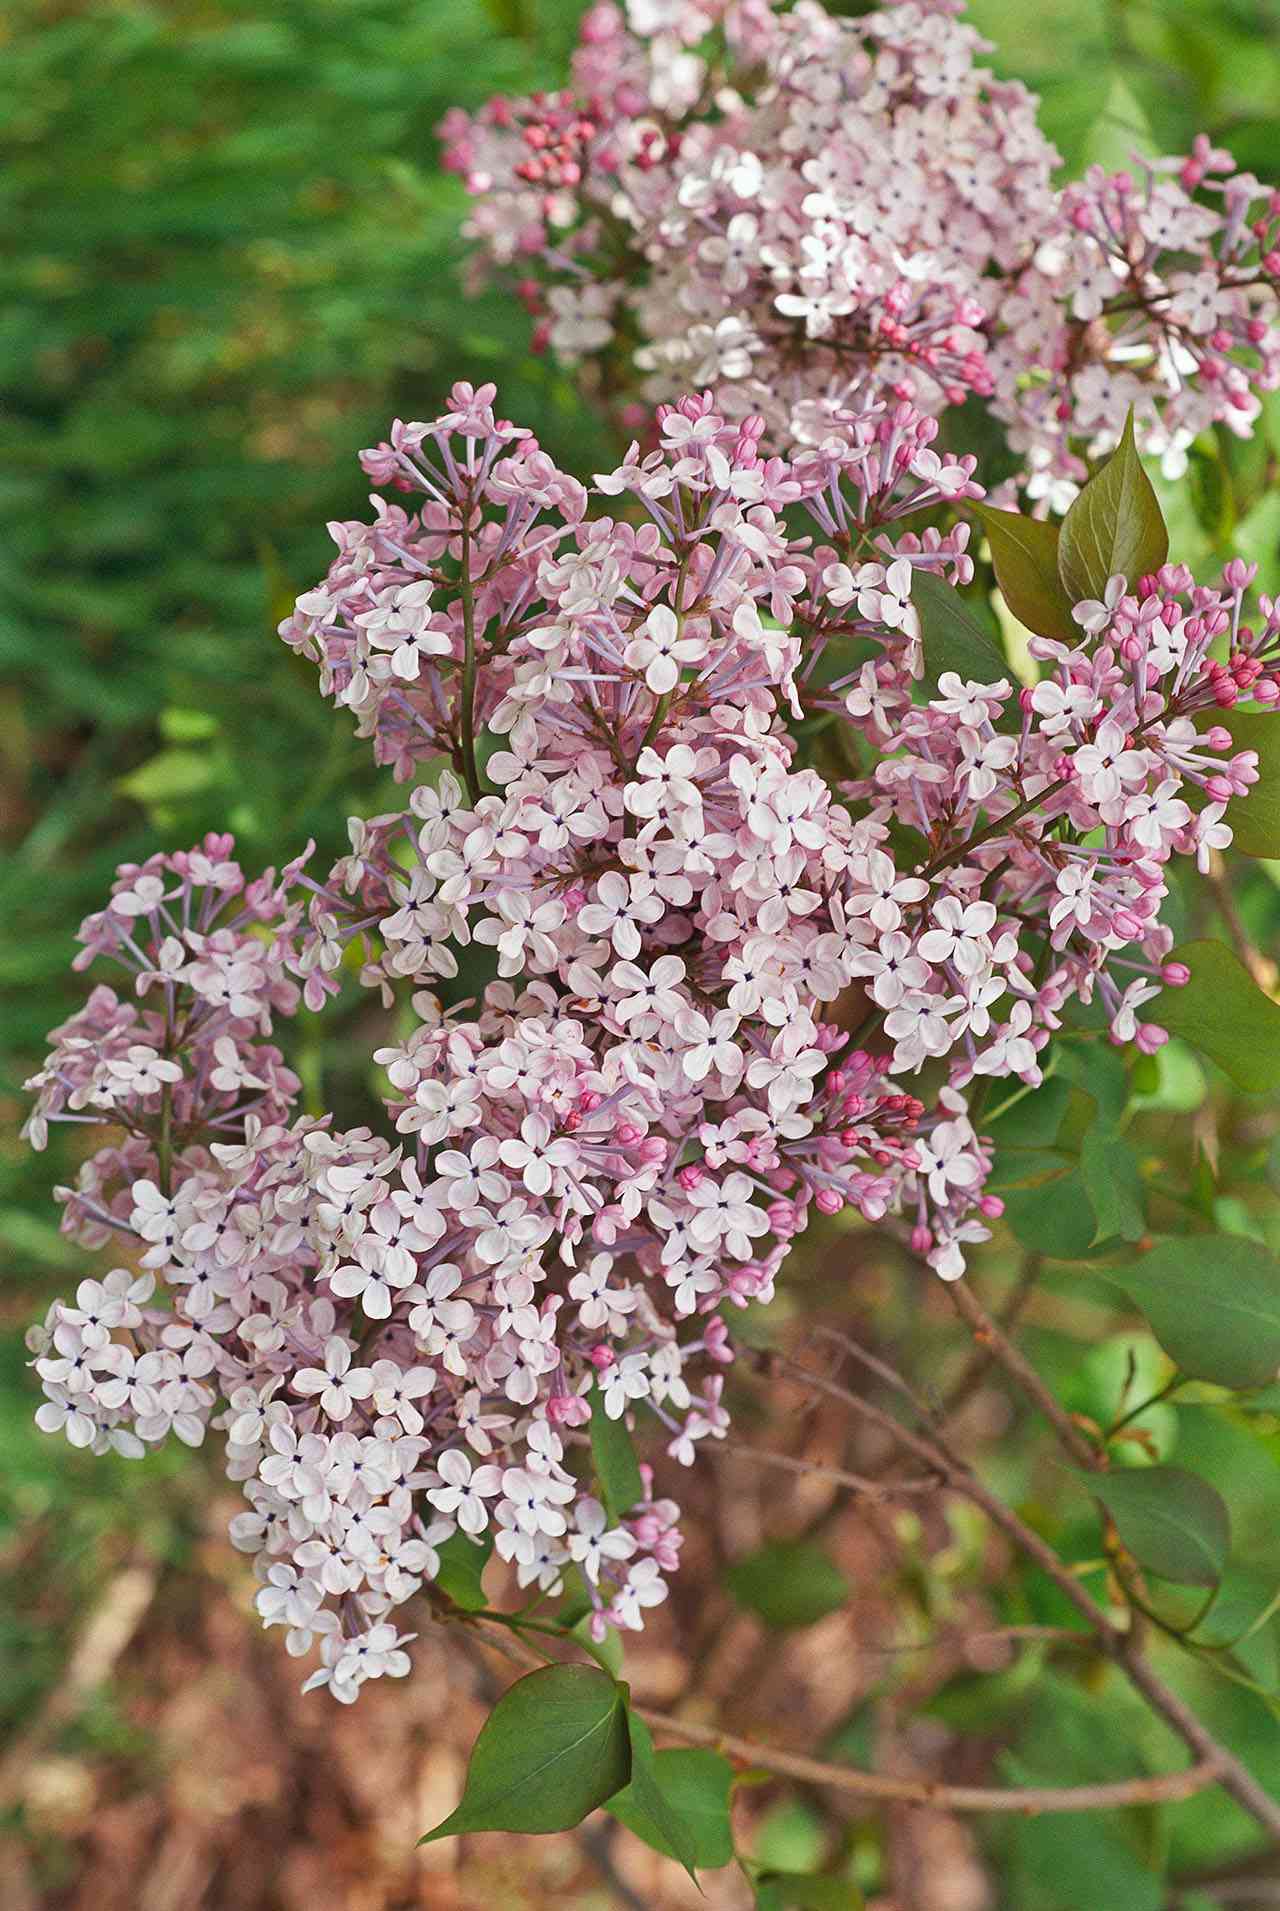 Lilac shrubs